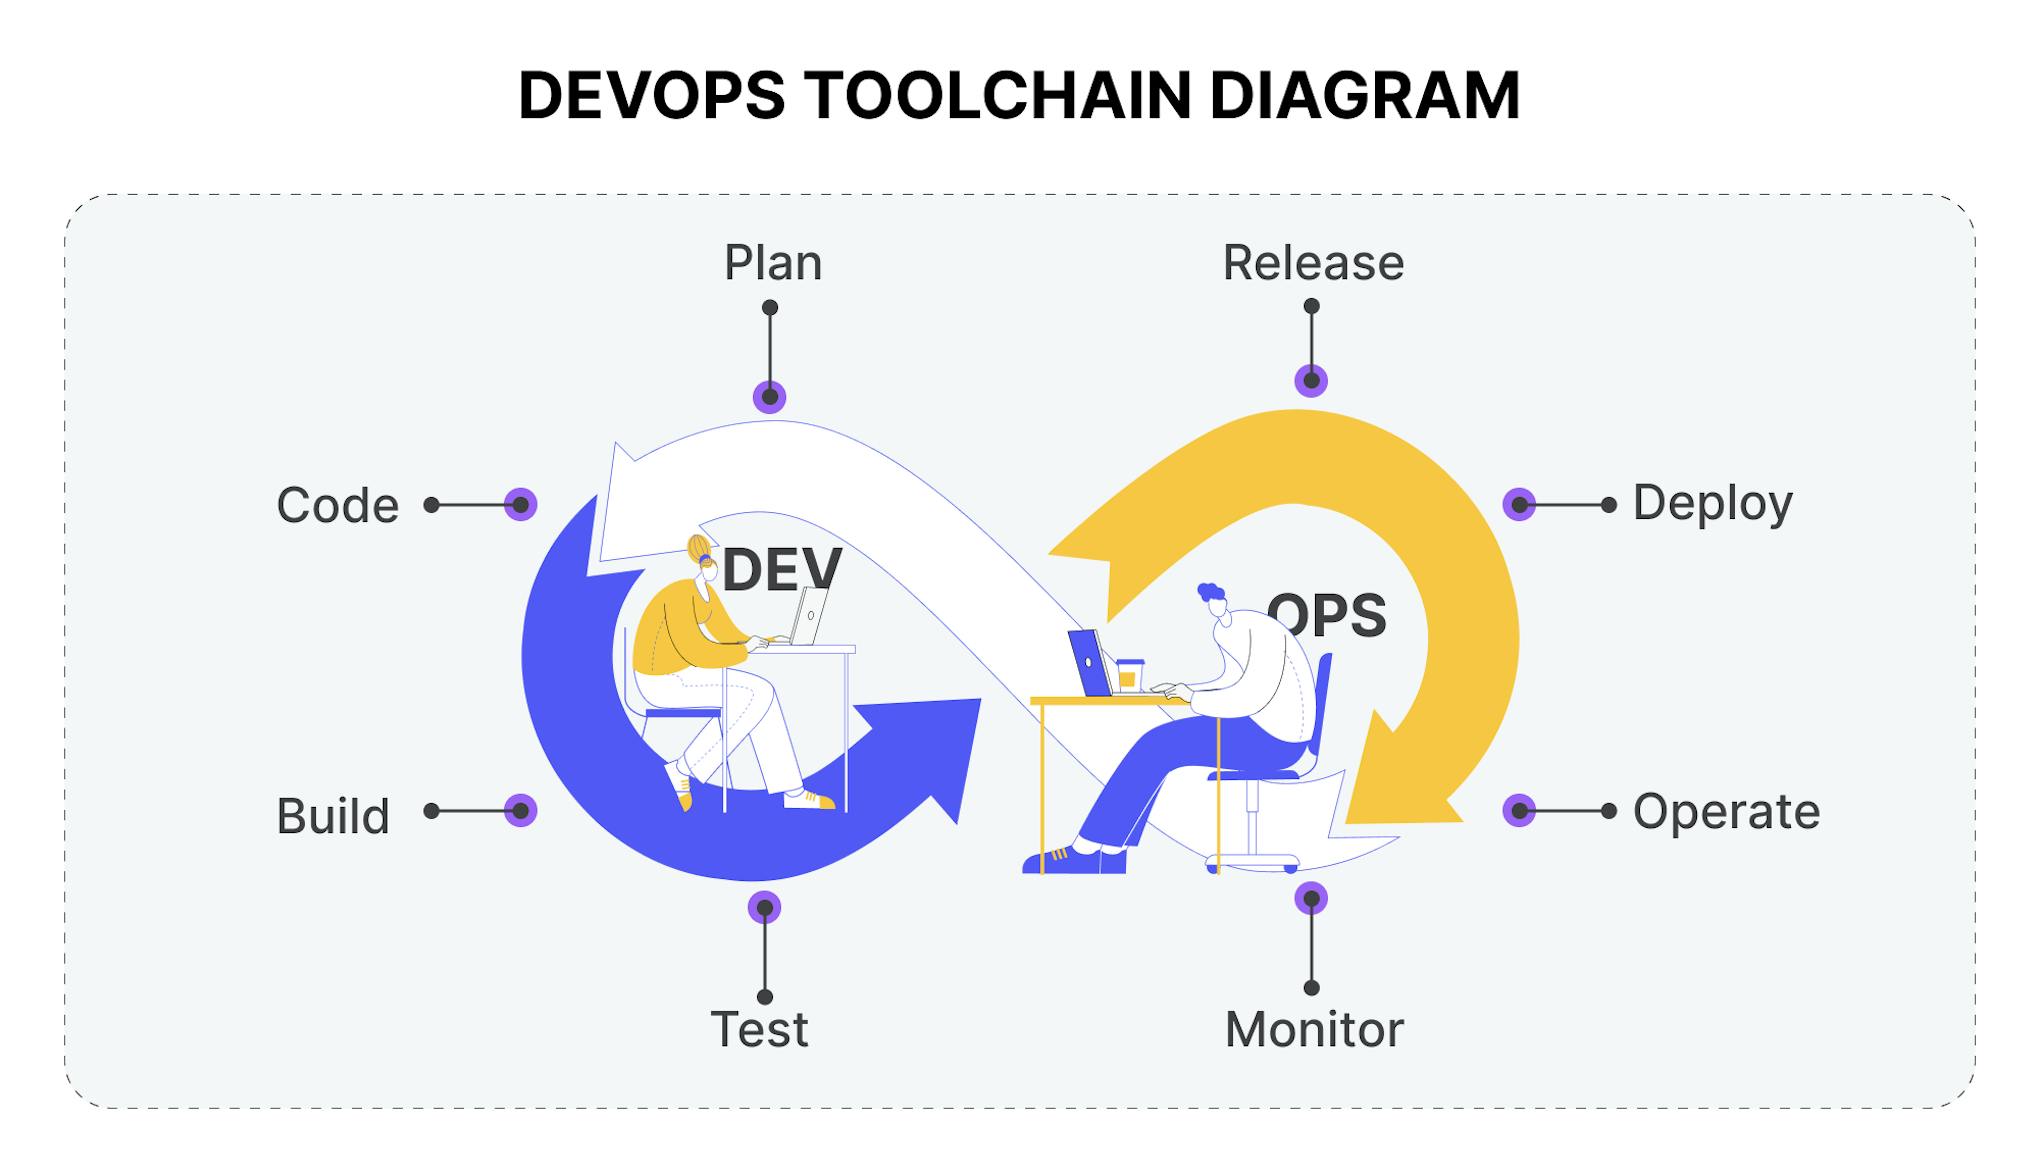 DevOps toolchain diagram